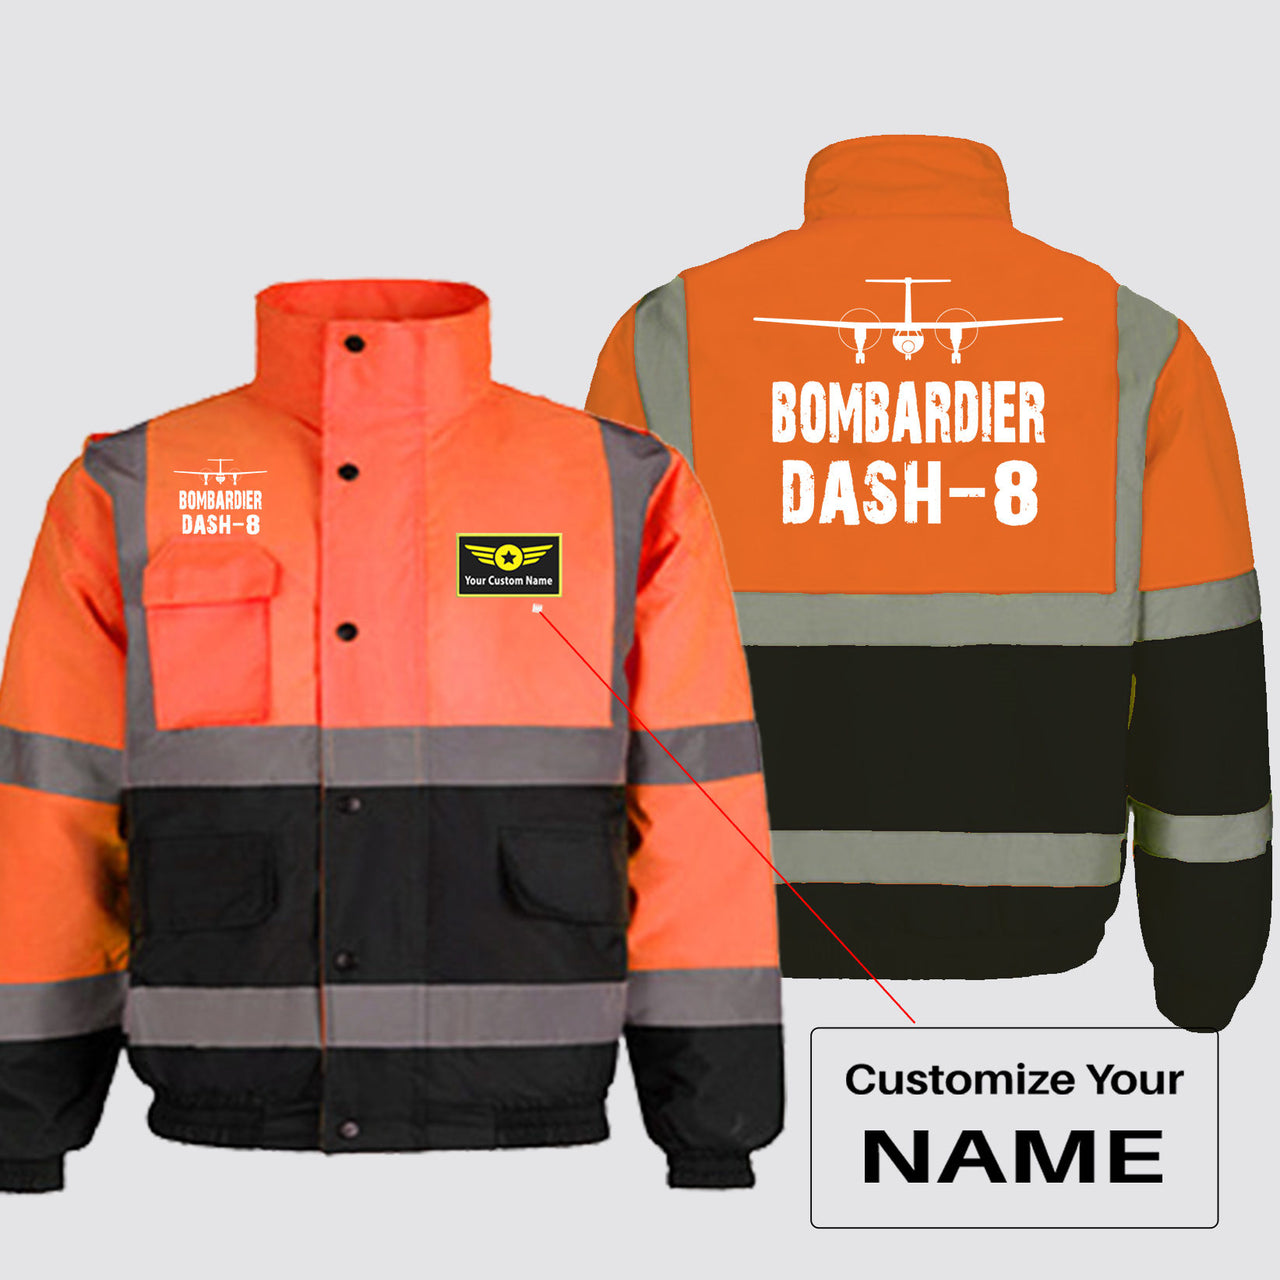 Bombardier Dash-8 & Plane Designed Reflective Winter Jackets